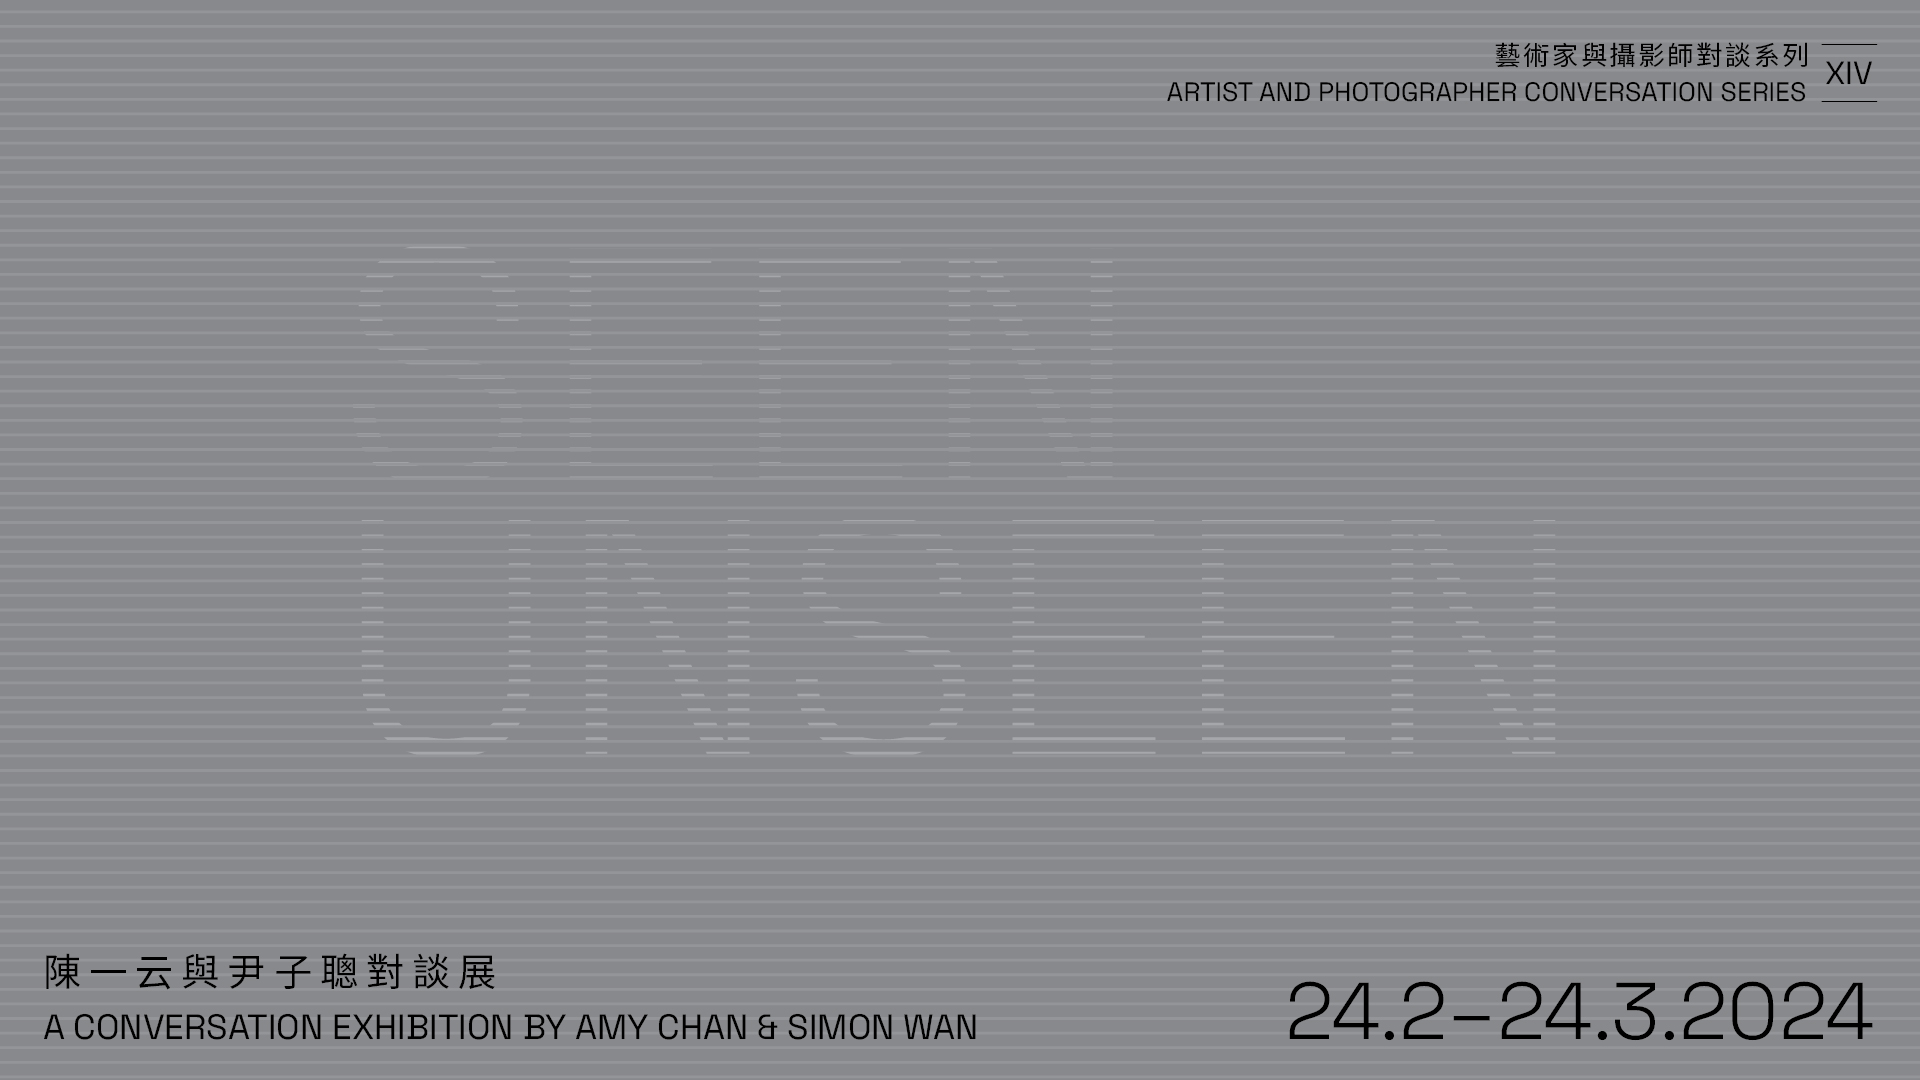 Artist and Photographer Conversation Series XIV: “Seen Unseen” — A Conversation Exhibition by Amy Chan & Simon Wan